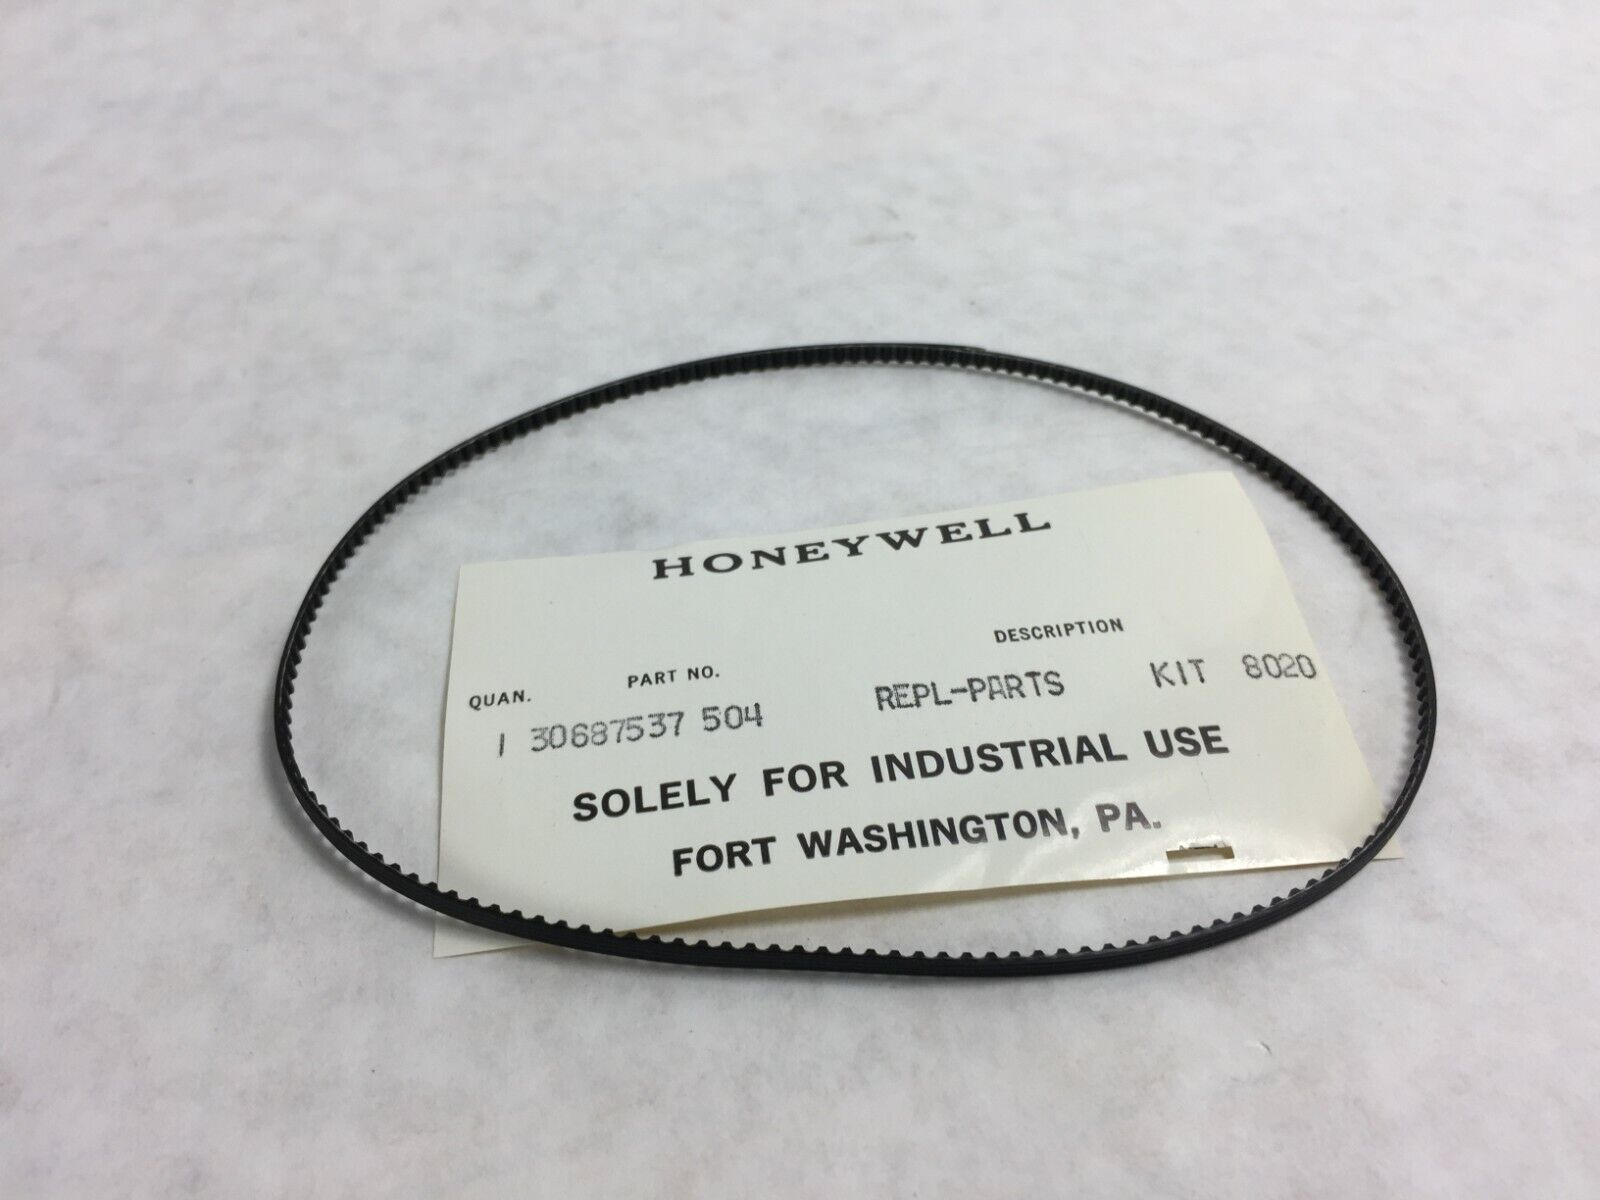 Honeywell 30687537-504 Gear Belt Kit 8020